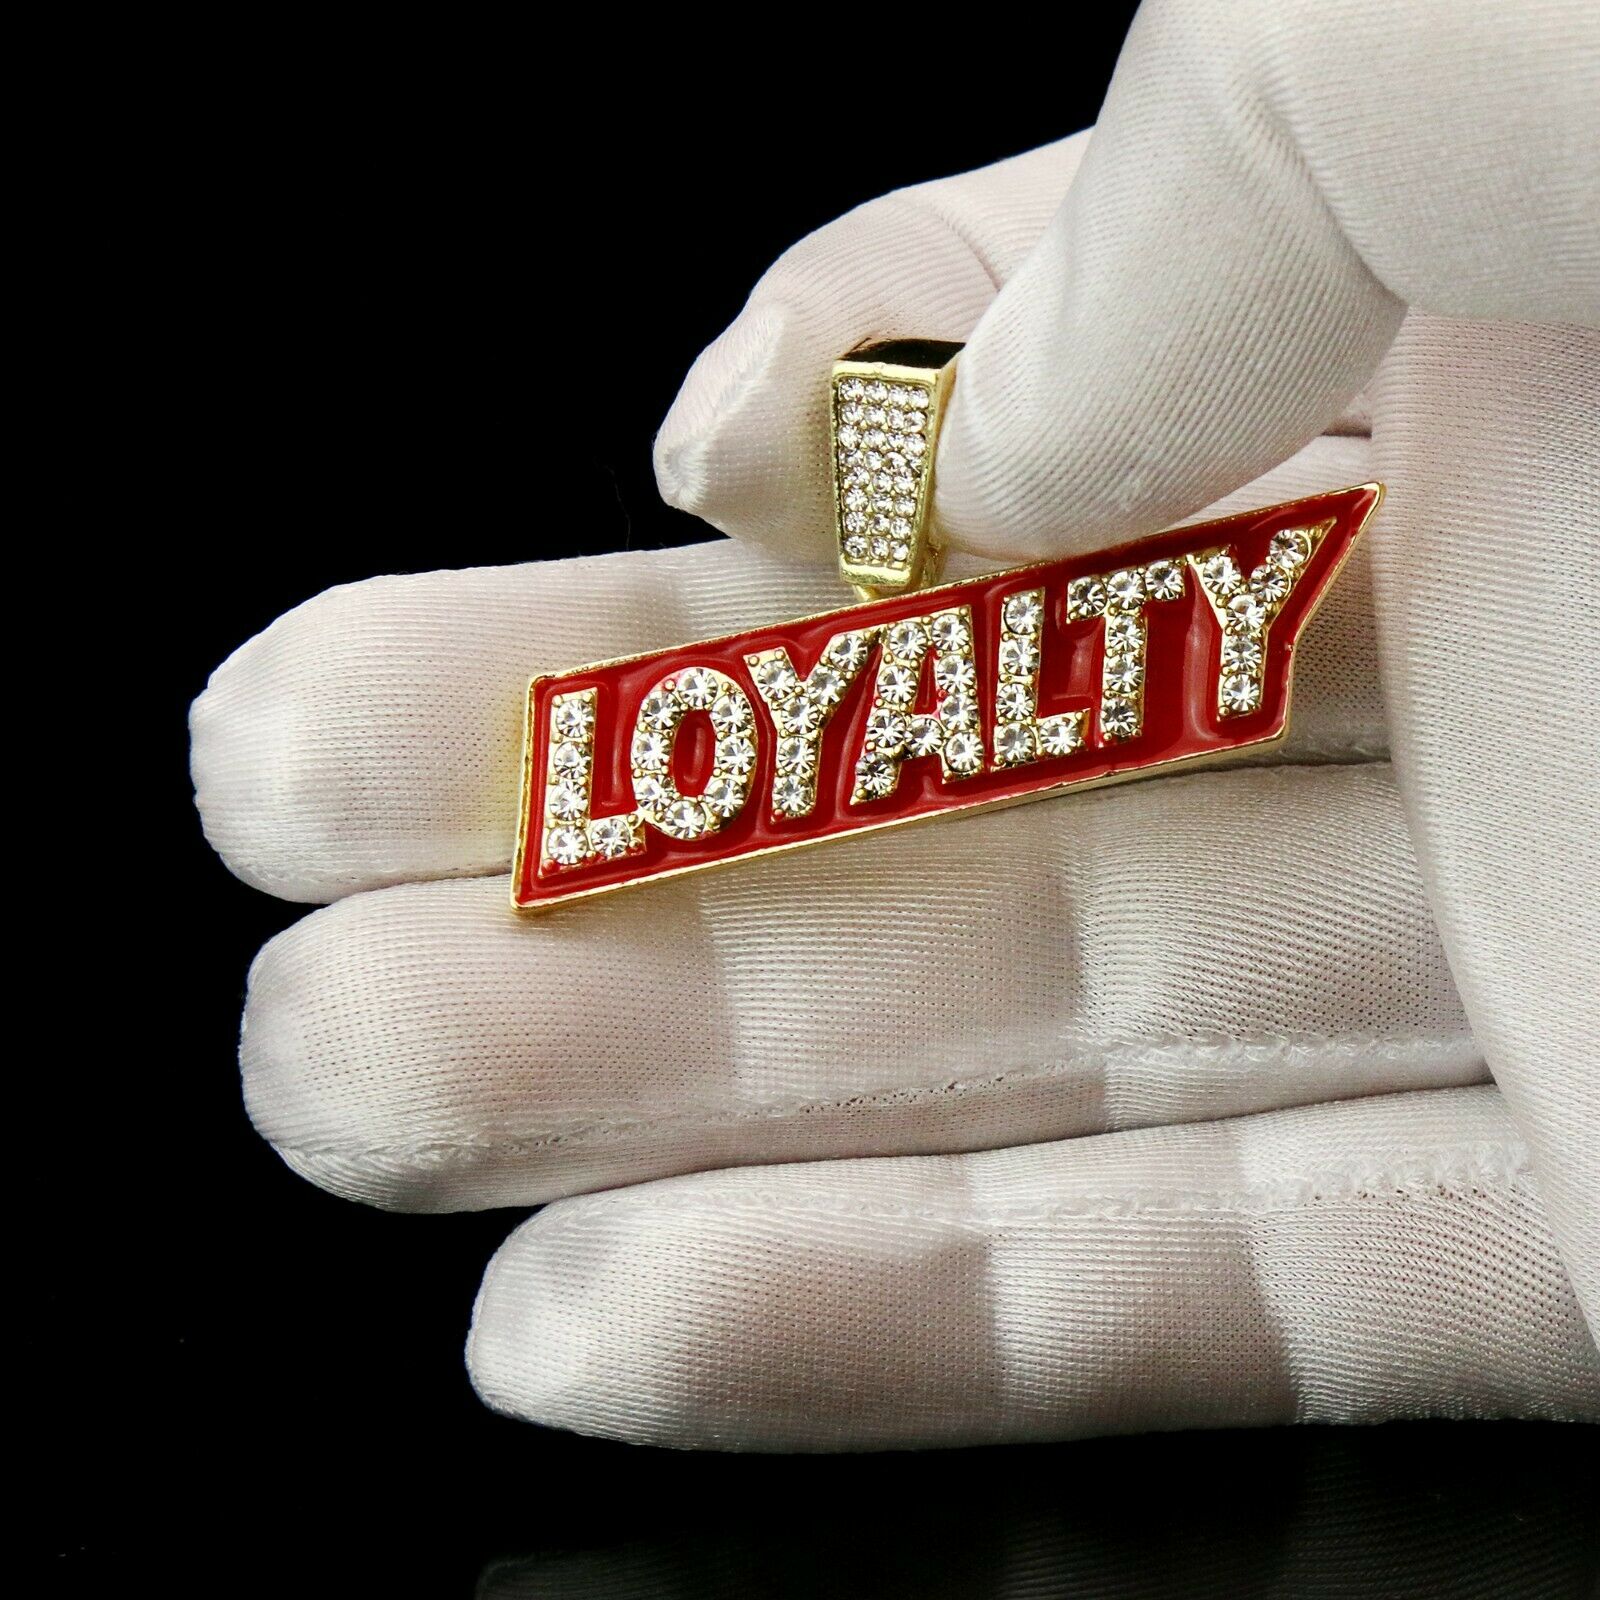 Loyalty 4 Pcs Set Cuban, Tennis & Rope Chain Bundle Gold PT